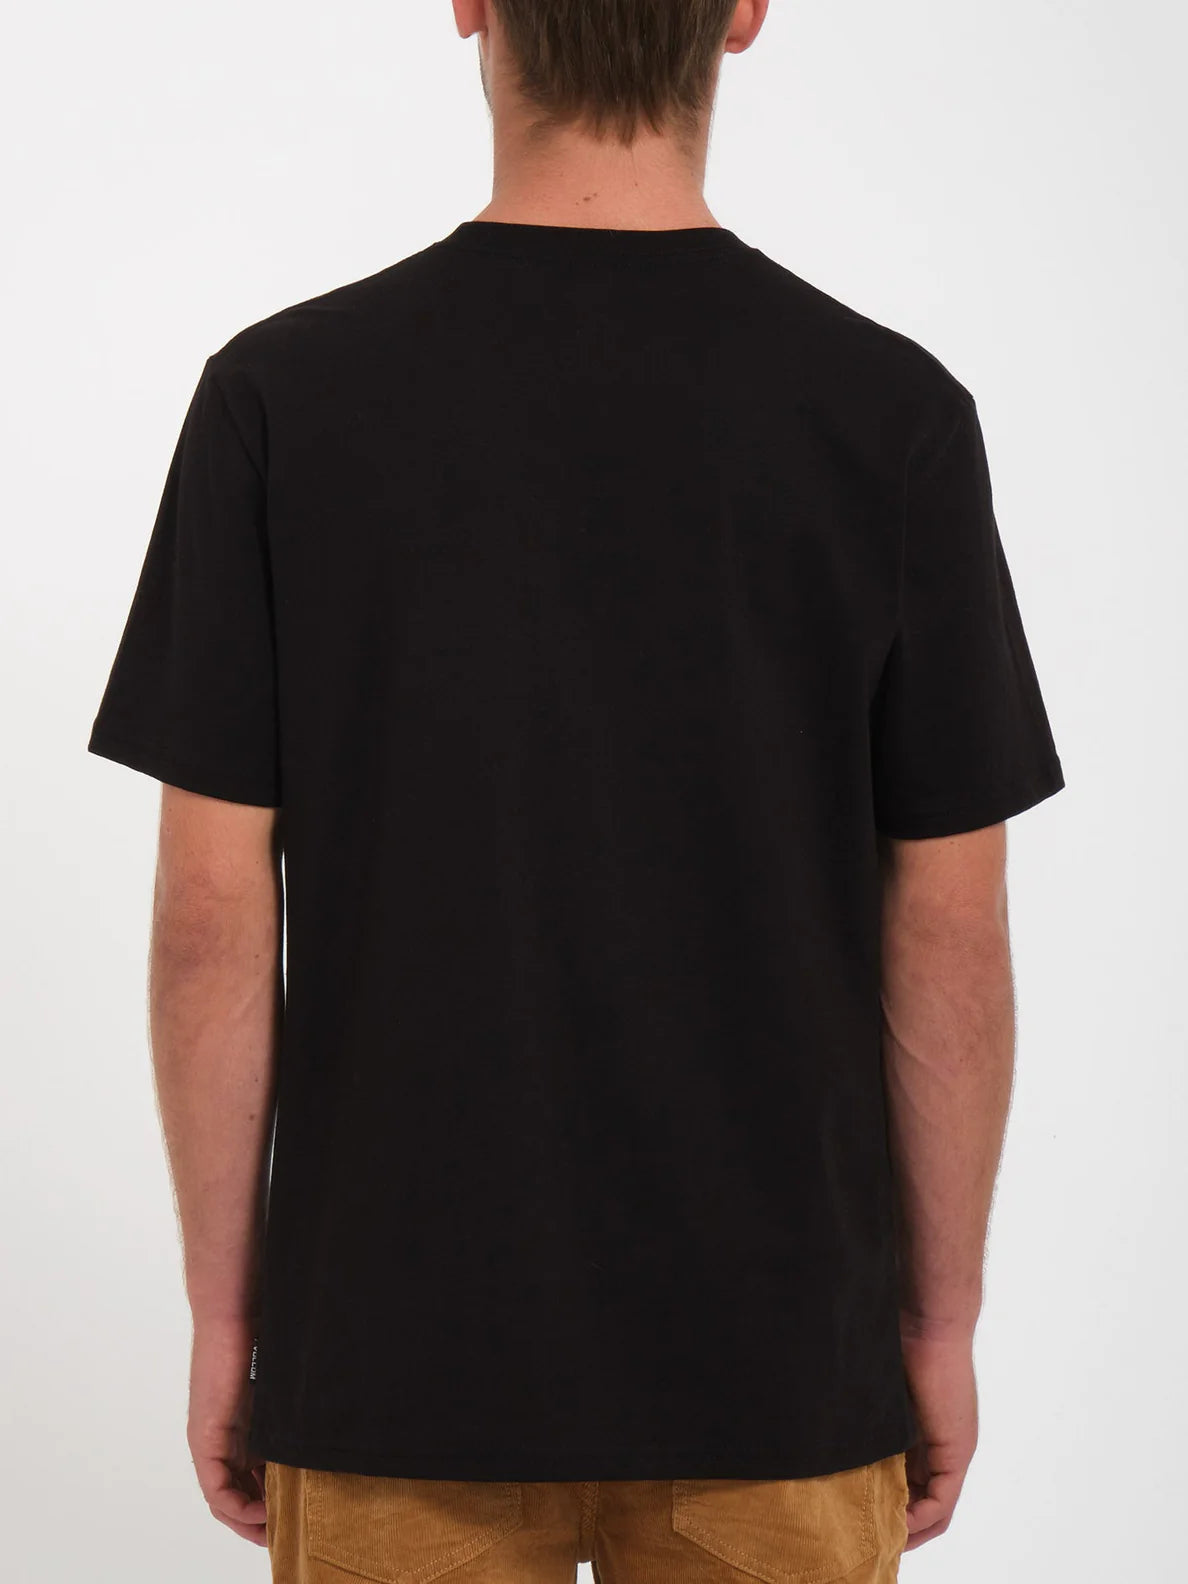 Camiseta Volcom Max Sherman 2 - Black | Camisetas de hombre | Camisetas manga corta de hombre | Volcom Shop | surfdevils.com